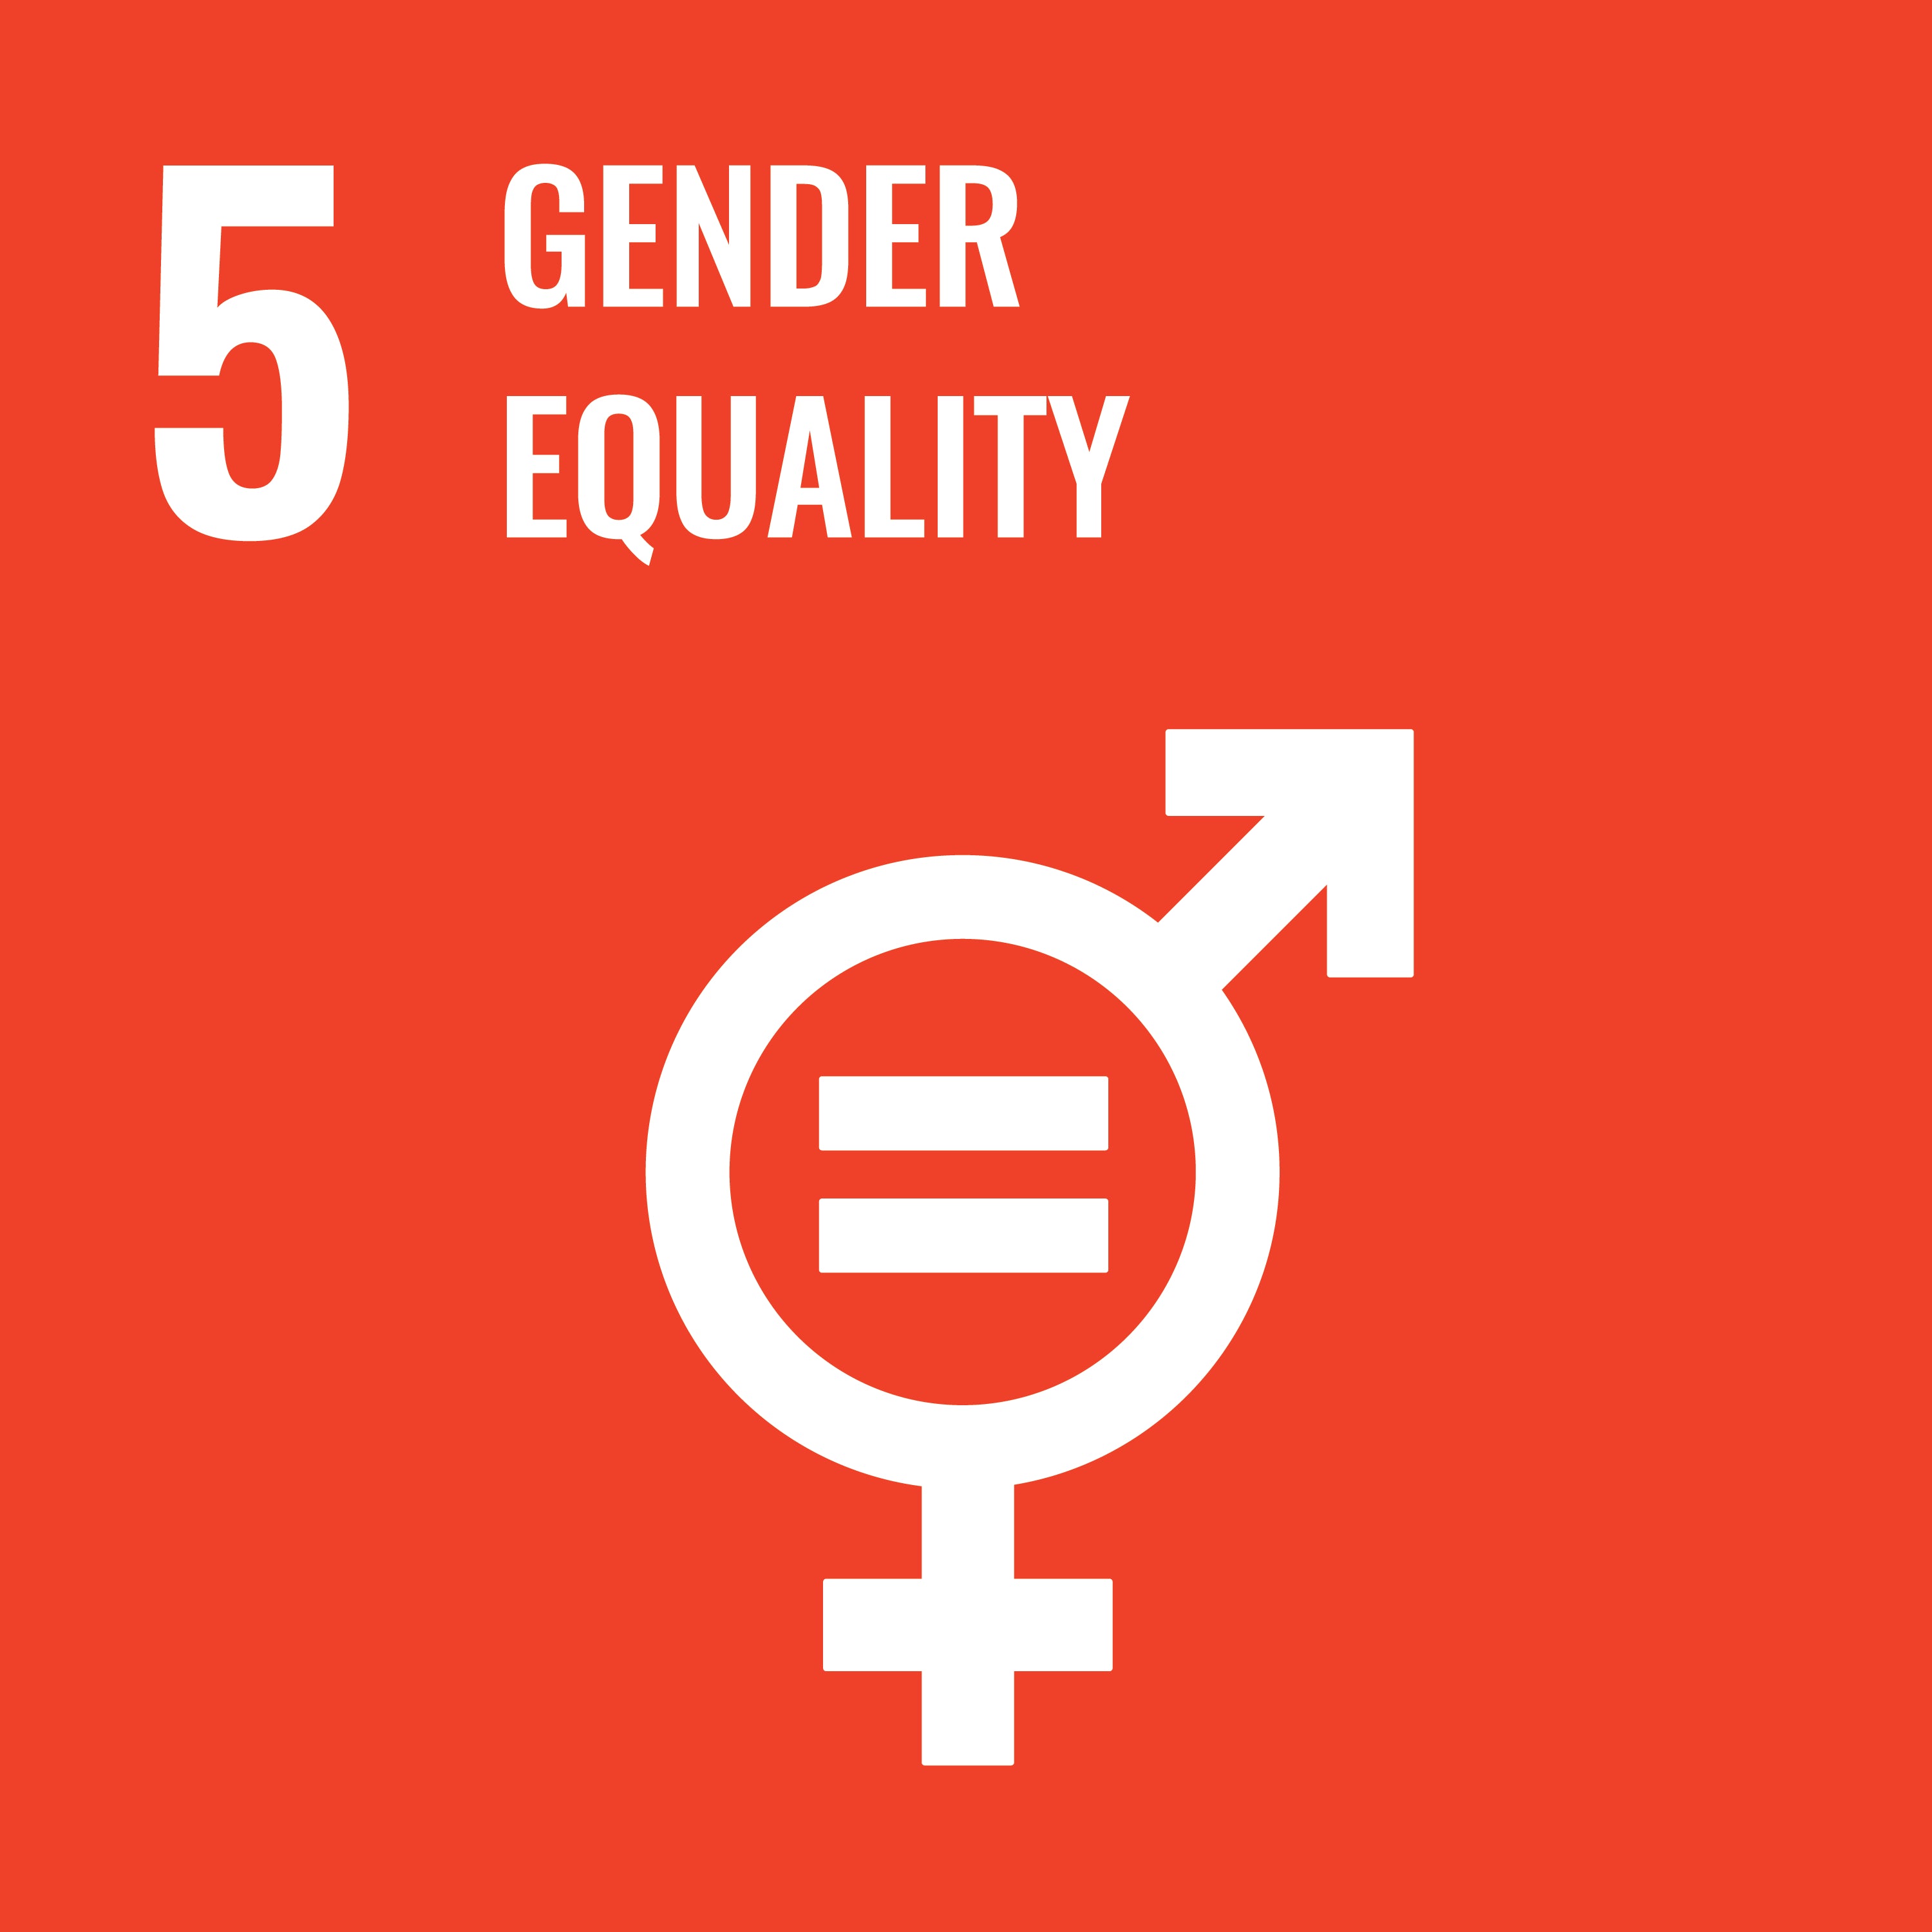 UN Sustainable Development Goals 5 - Gender Equality